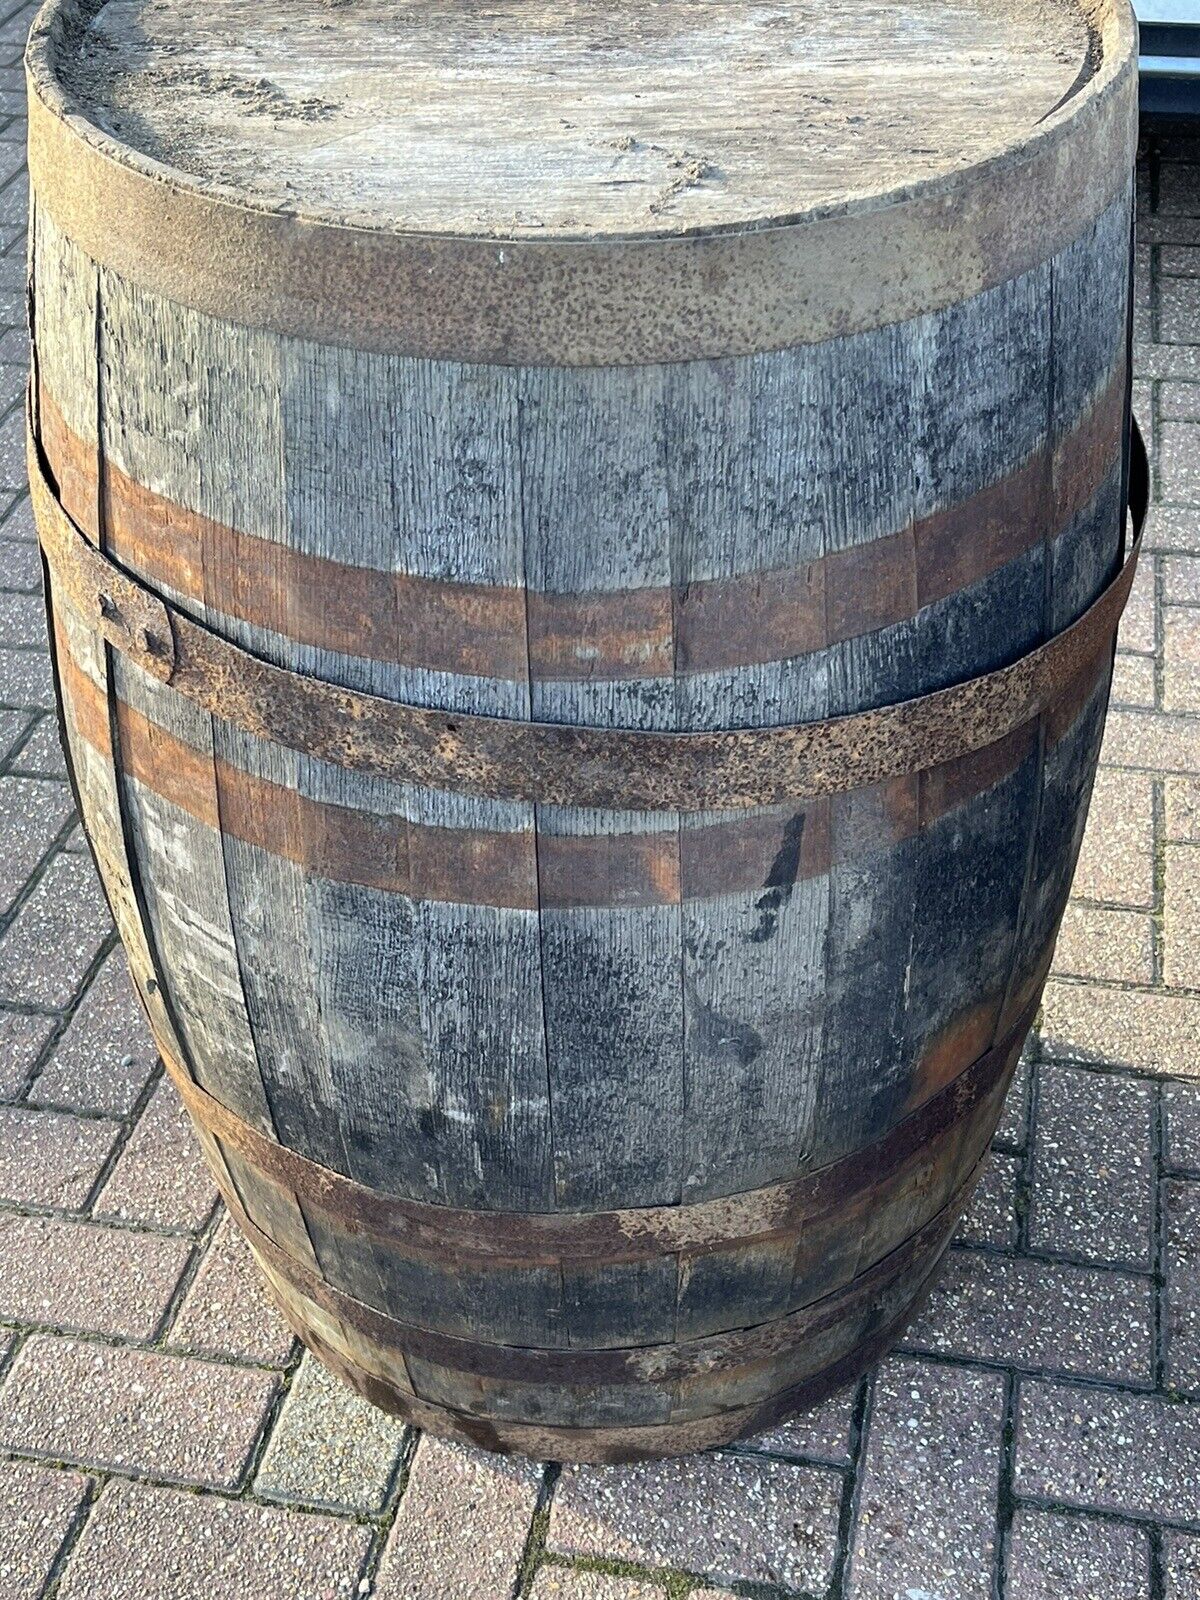 Oak Beer / Whisky Barrels. Full Size, Make Great Home Bar Tables. 5 Available.